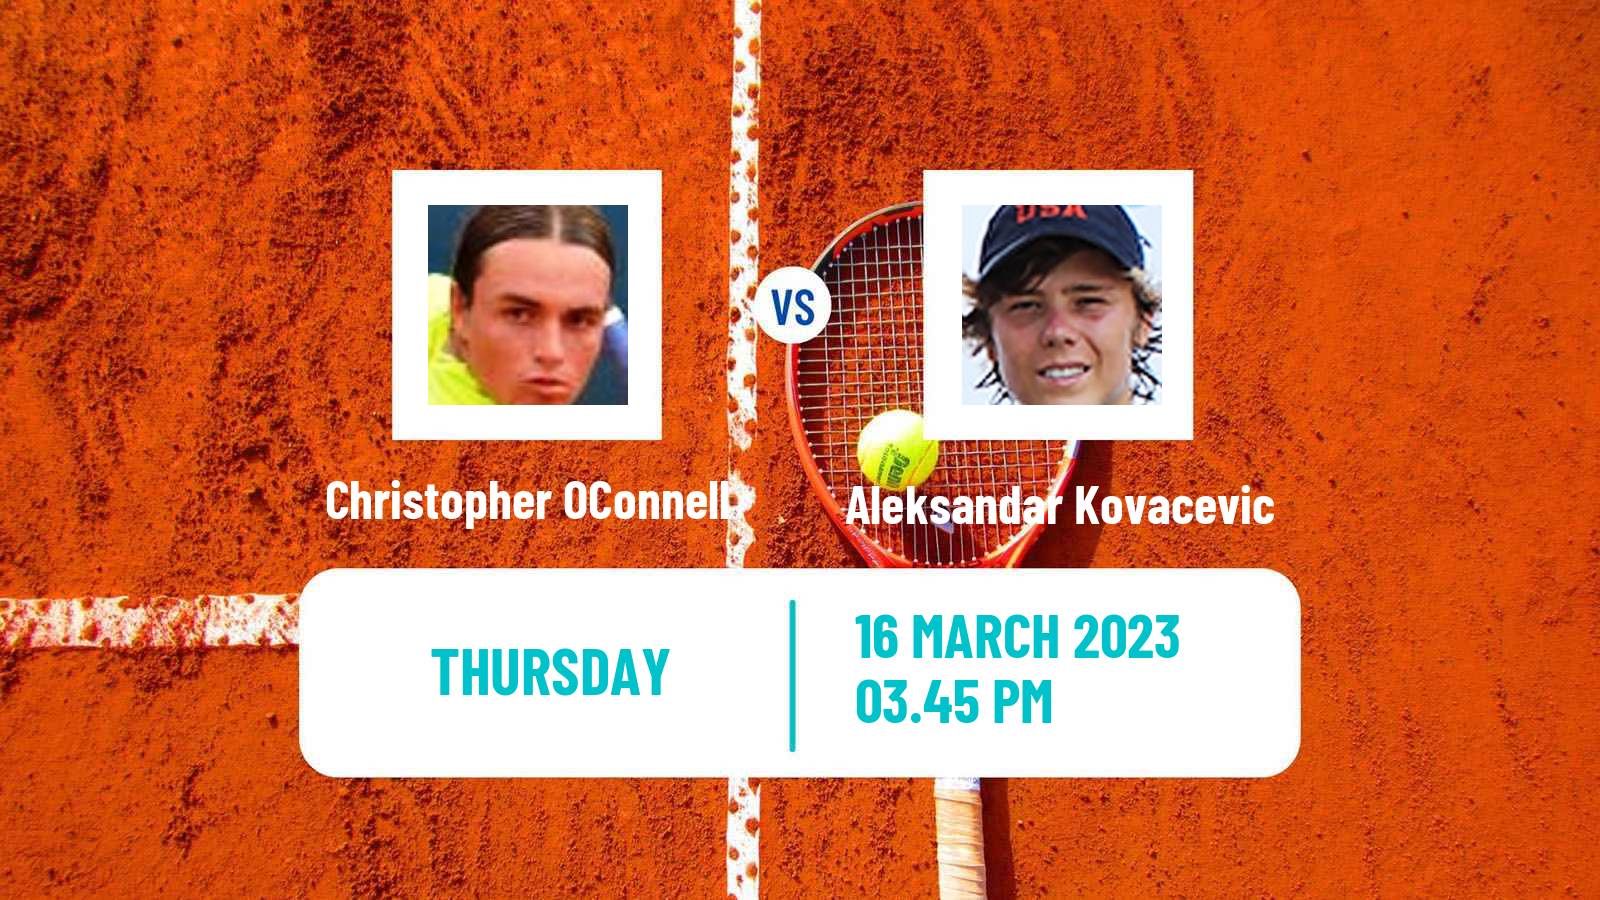 Tennis ATP Challenger Christopher OConnell - Aleksandar Kovacevic